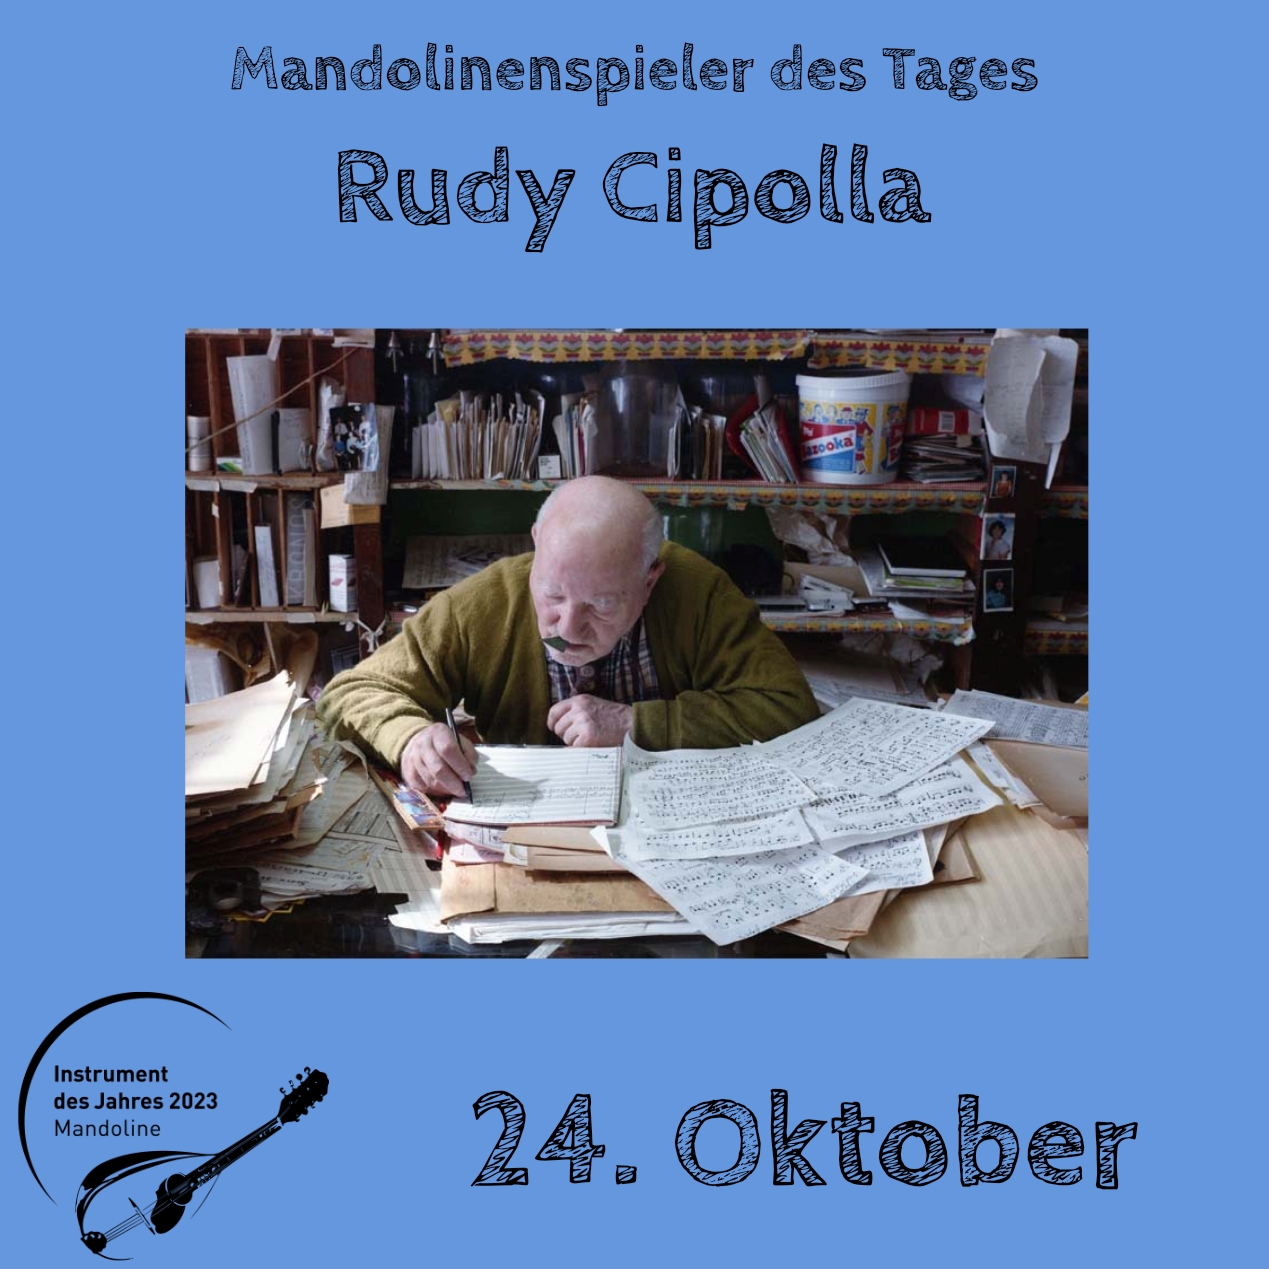 24. Oktober - Rudy Cipolla Instrument des Jahres 2023 Mandolinenspieler Mandolinenspielerin des Tages